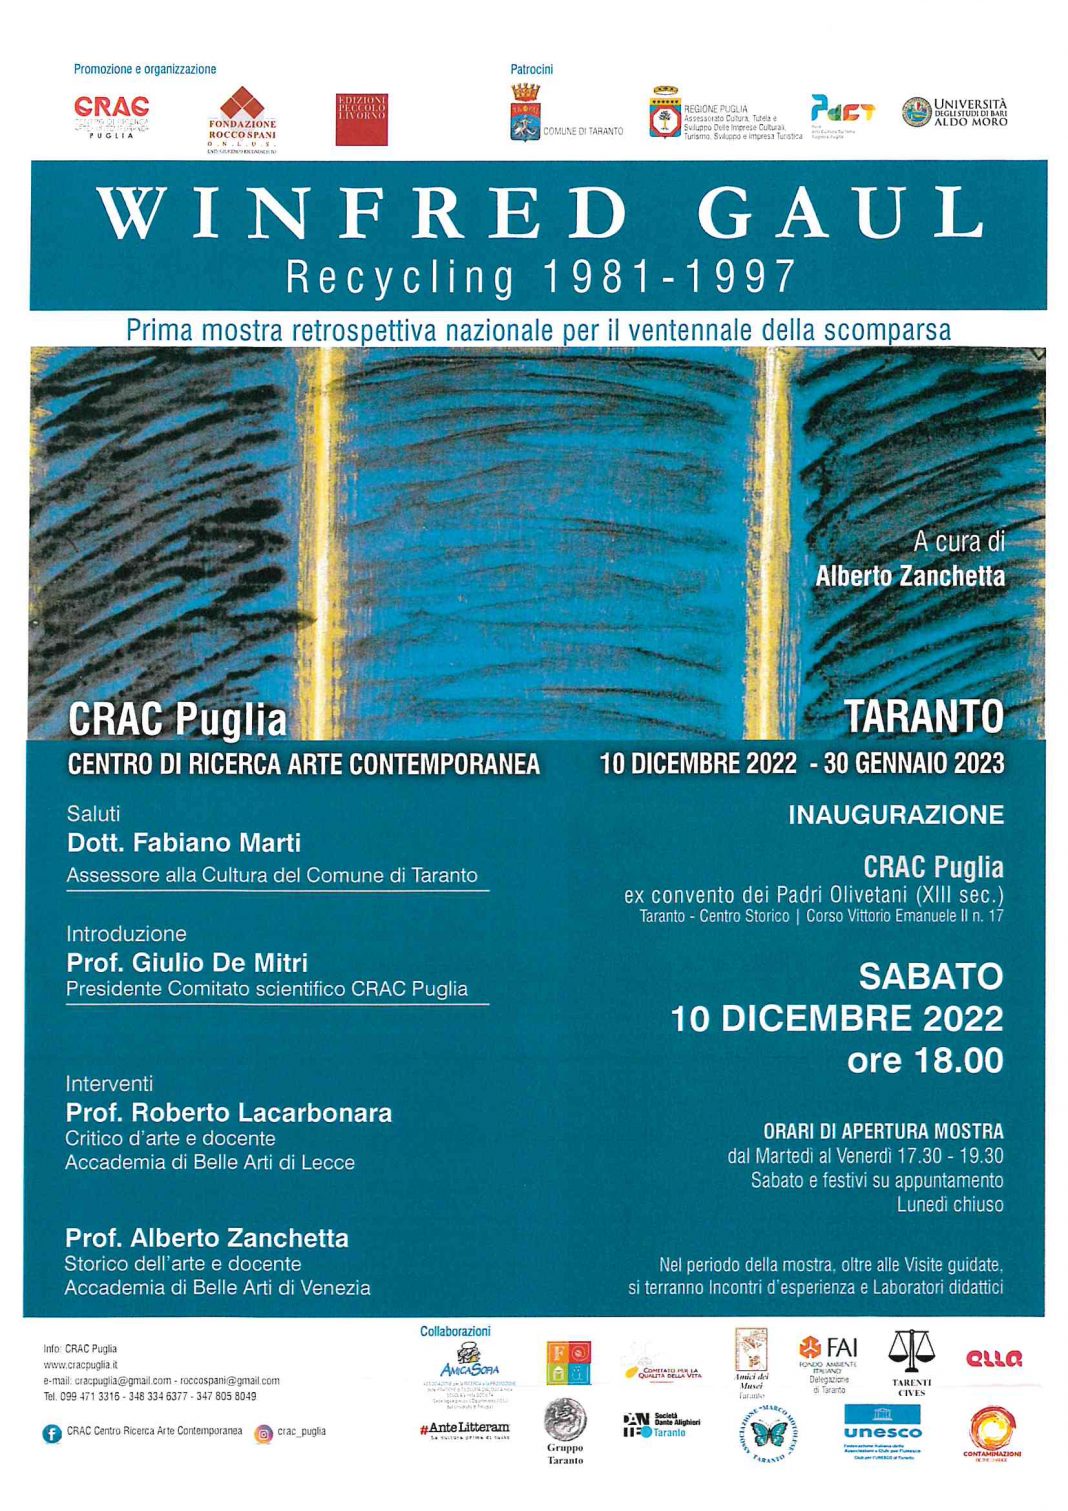 Winfred Gaul – Recycling 1981-1997https://www.exibart.com/repository/media/formidable/11/img/8c3/Manifesto-Winfred-Gaul-1068x1511.jpg